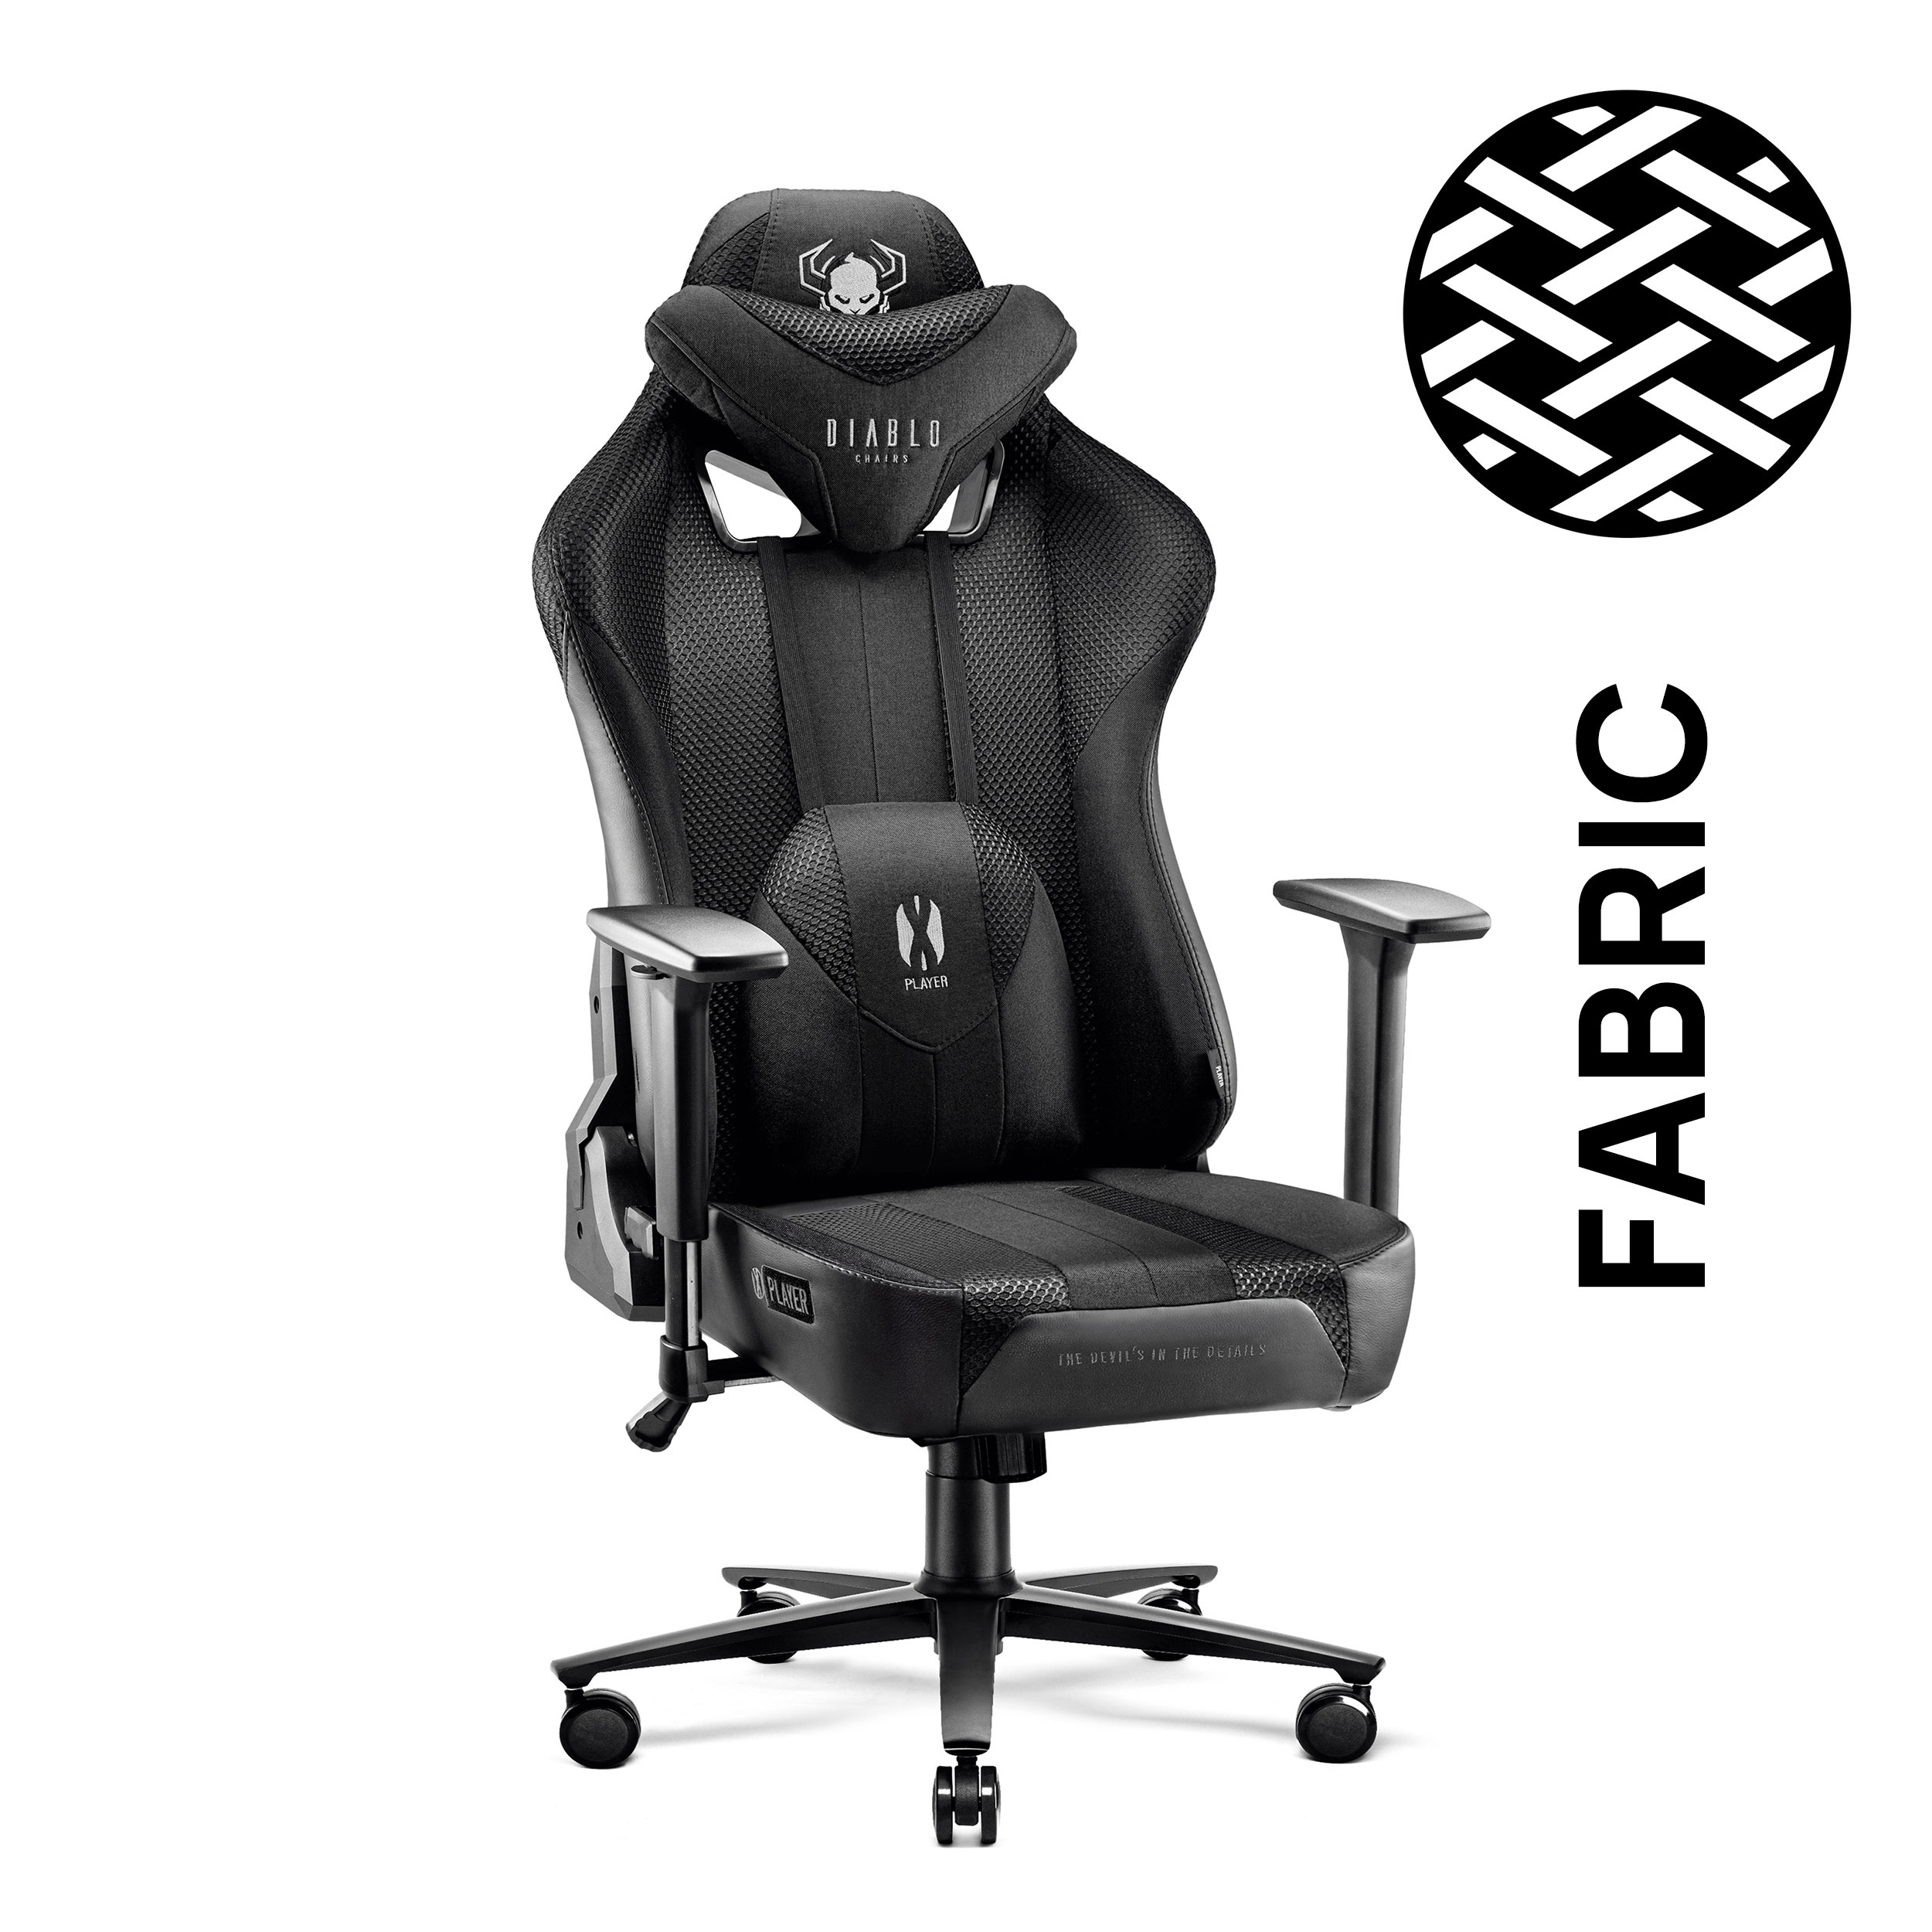 DIABLO CHAIRS GAMING STUHL black 2.0 X-PLAYER NORMAL Chair, Gaming